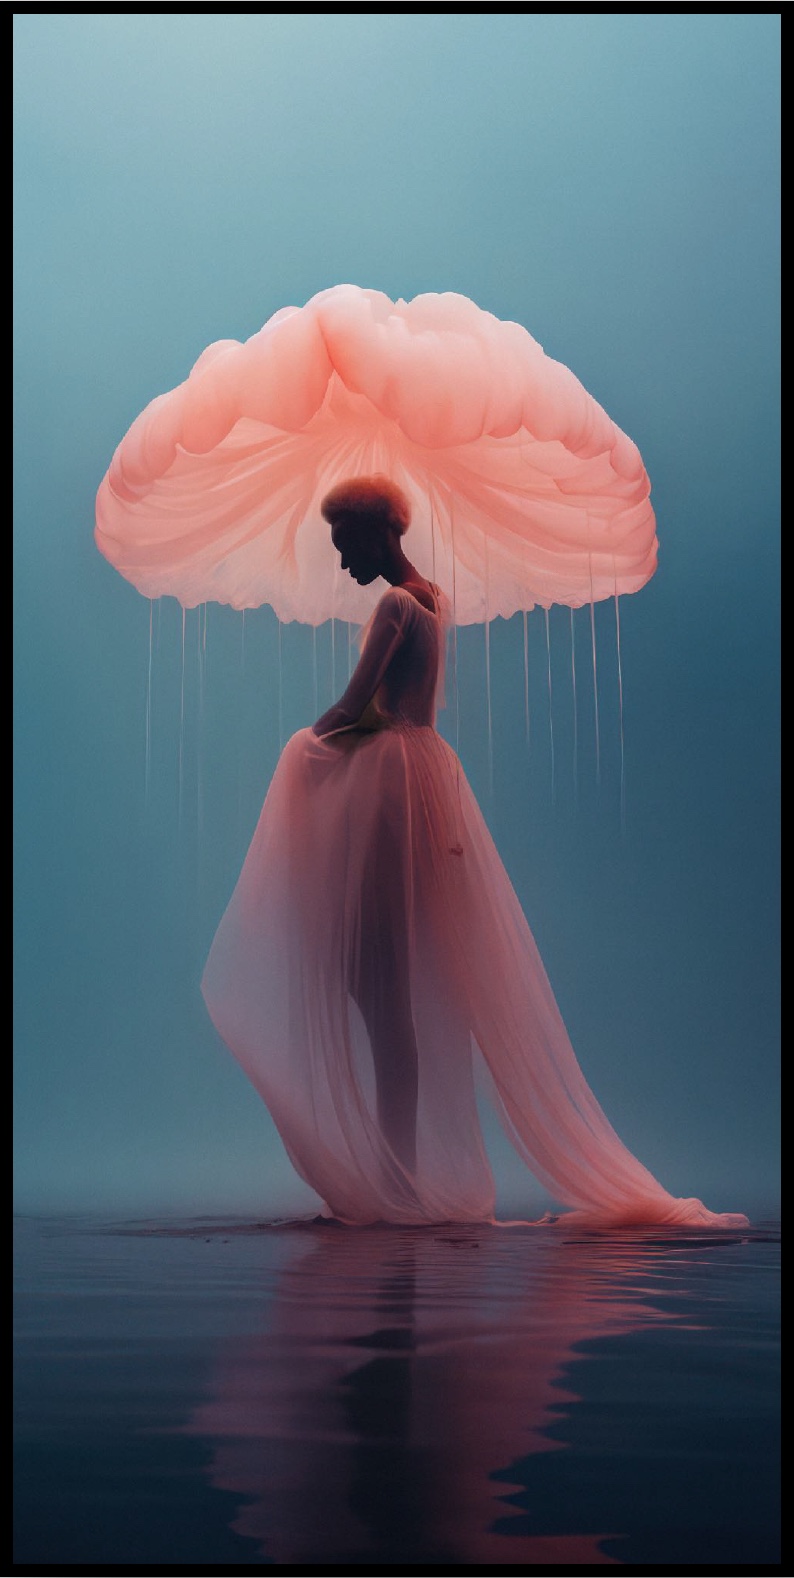 Imagine... ...a woman with a futuristic umbrella made of luminous translucent jellyfish